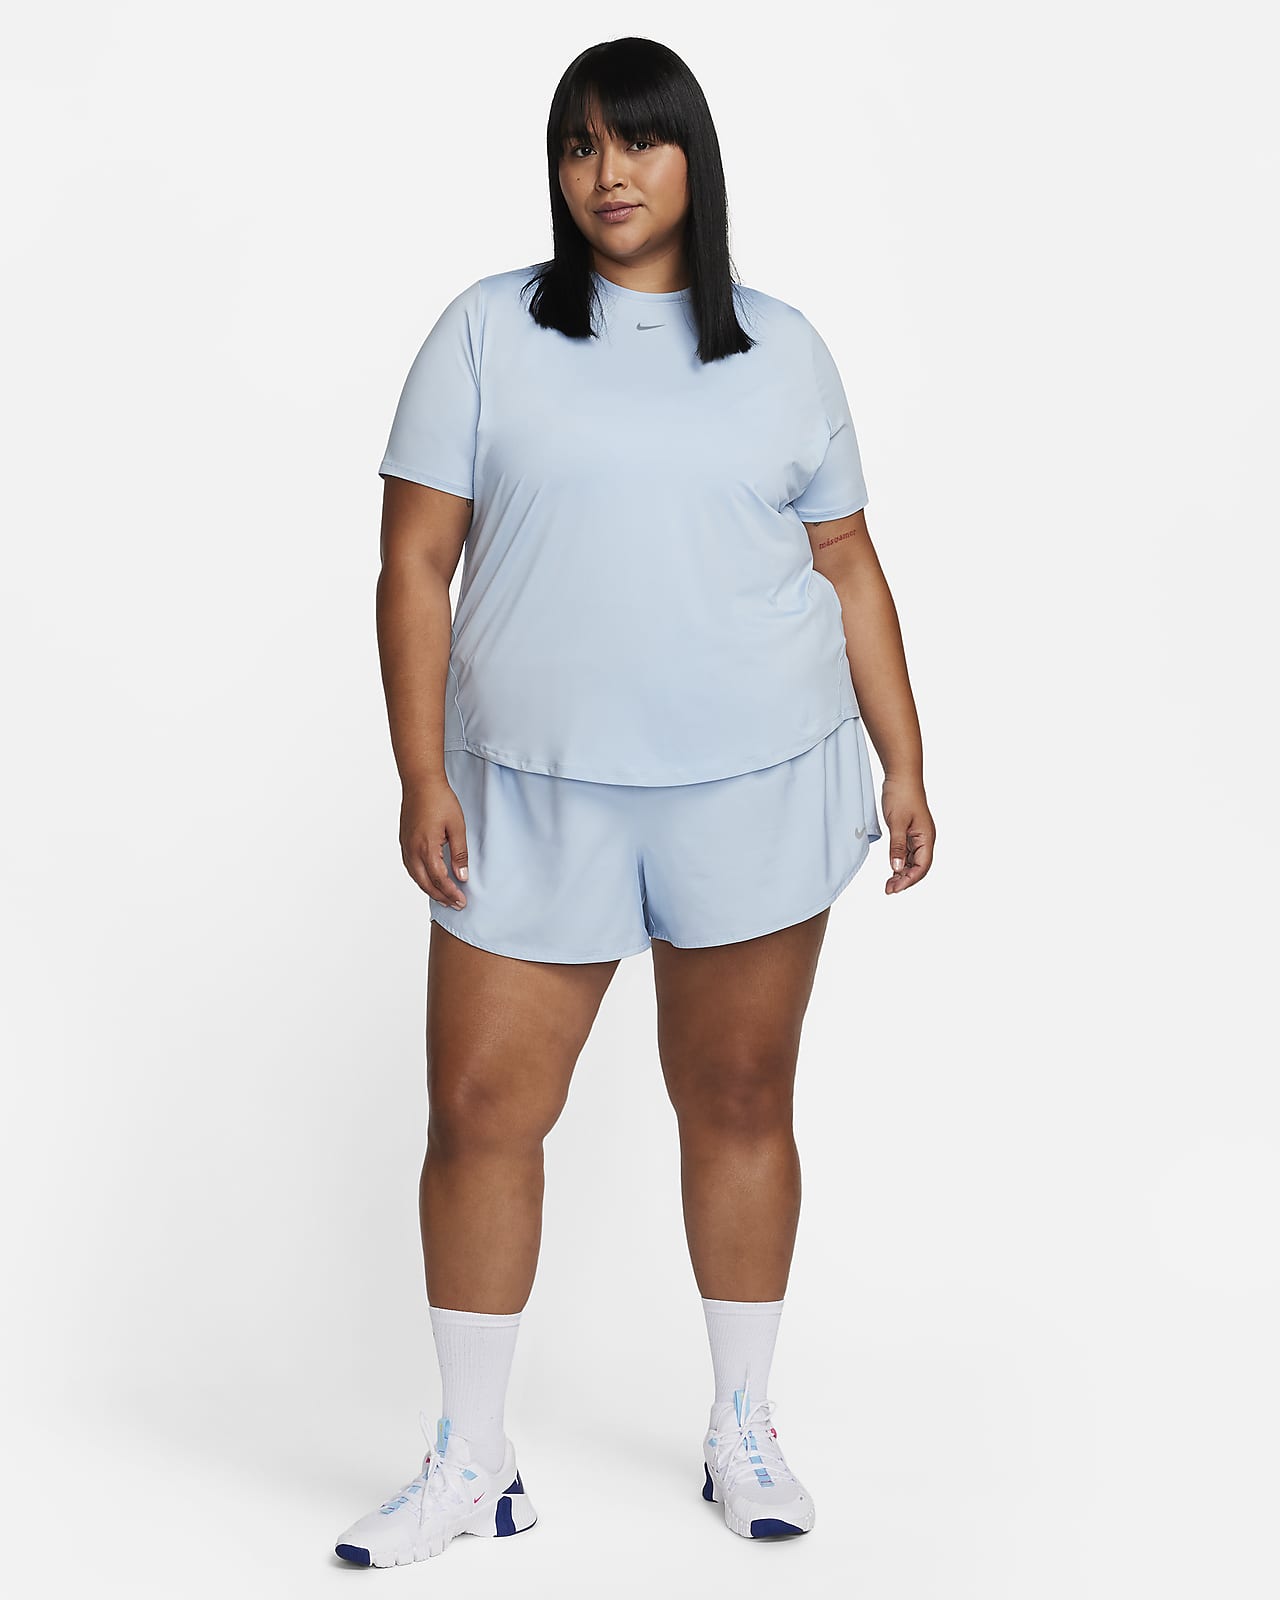 Women\'s Classic Top Short-Sleeve One Size). Dri-FIT Nike (Plus